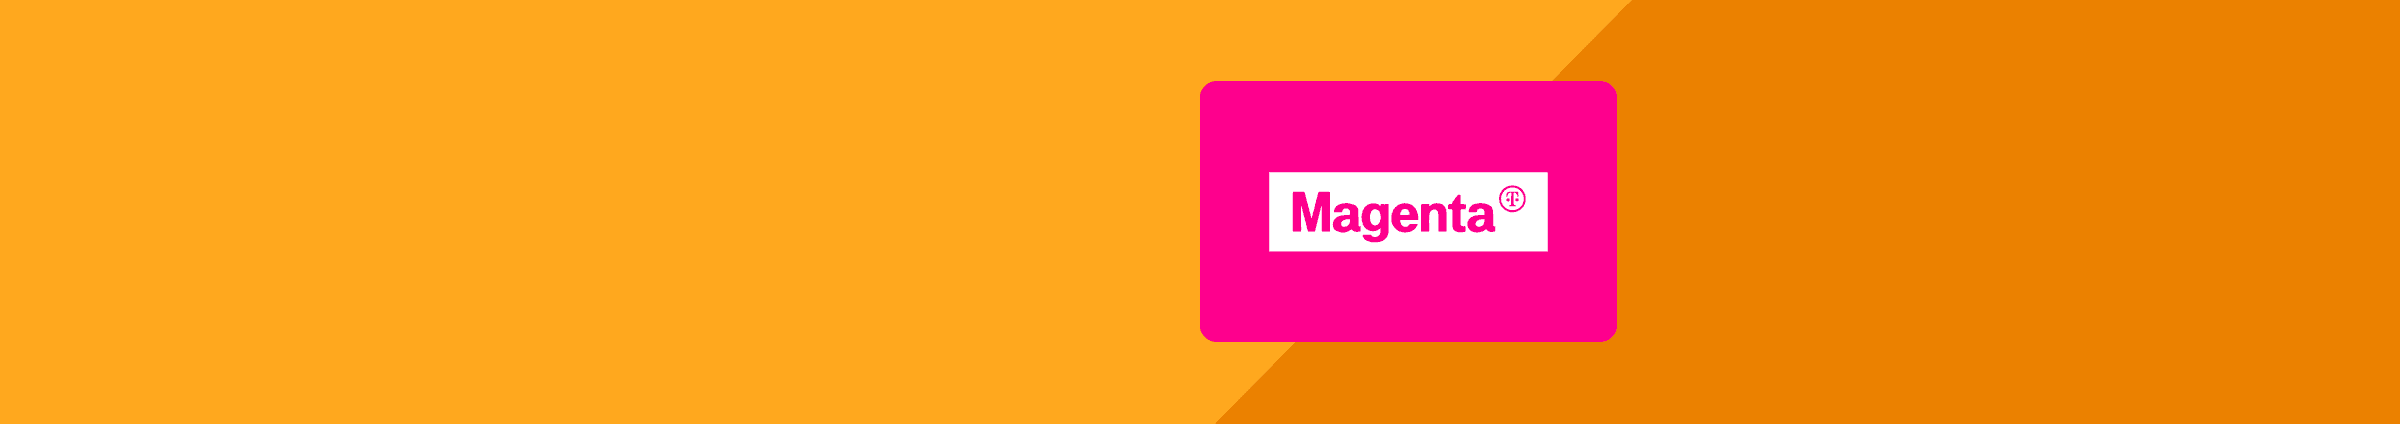 Magenta (T-Mobile)